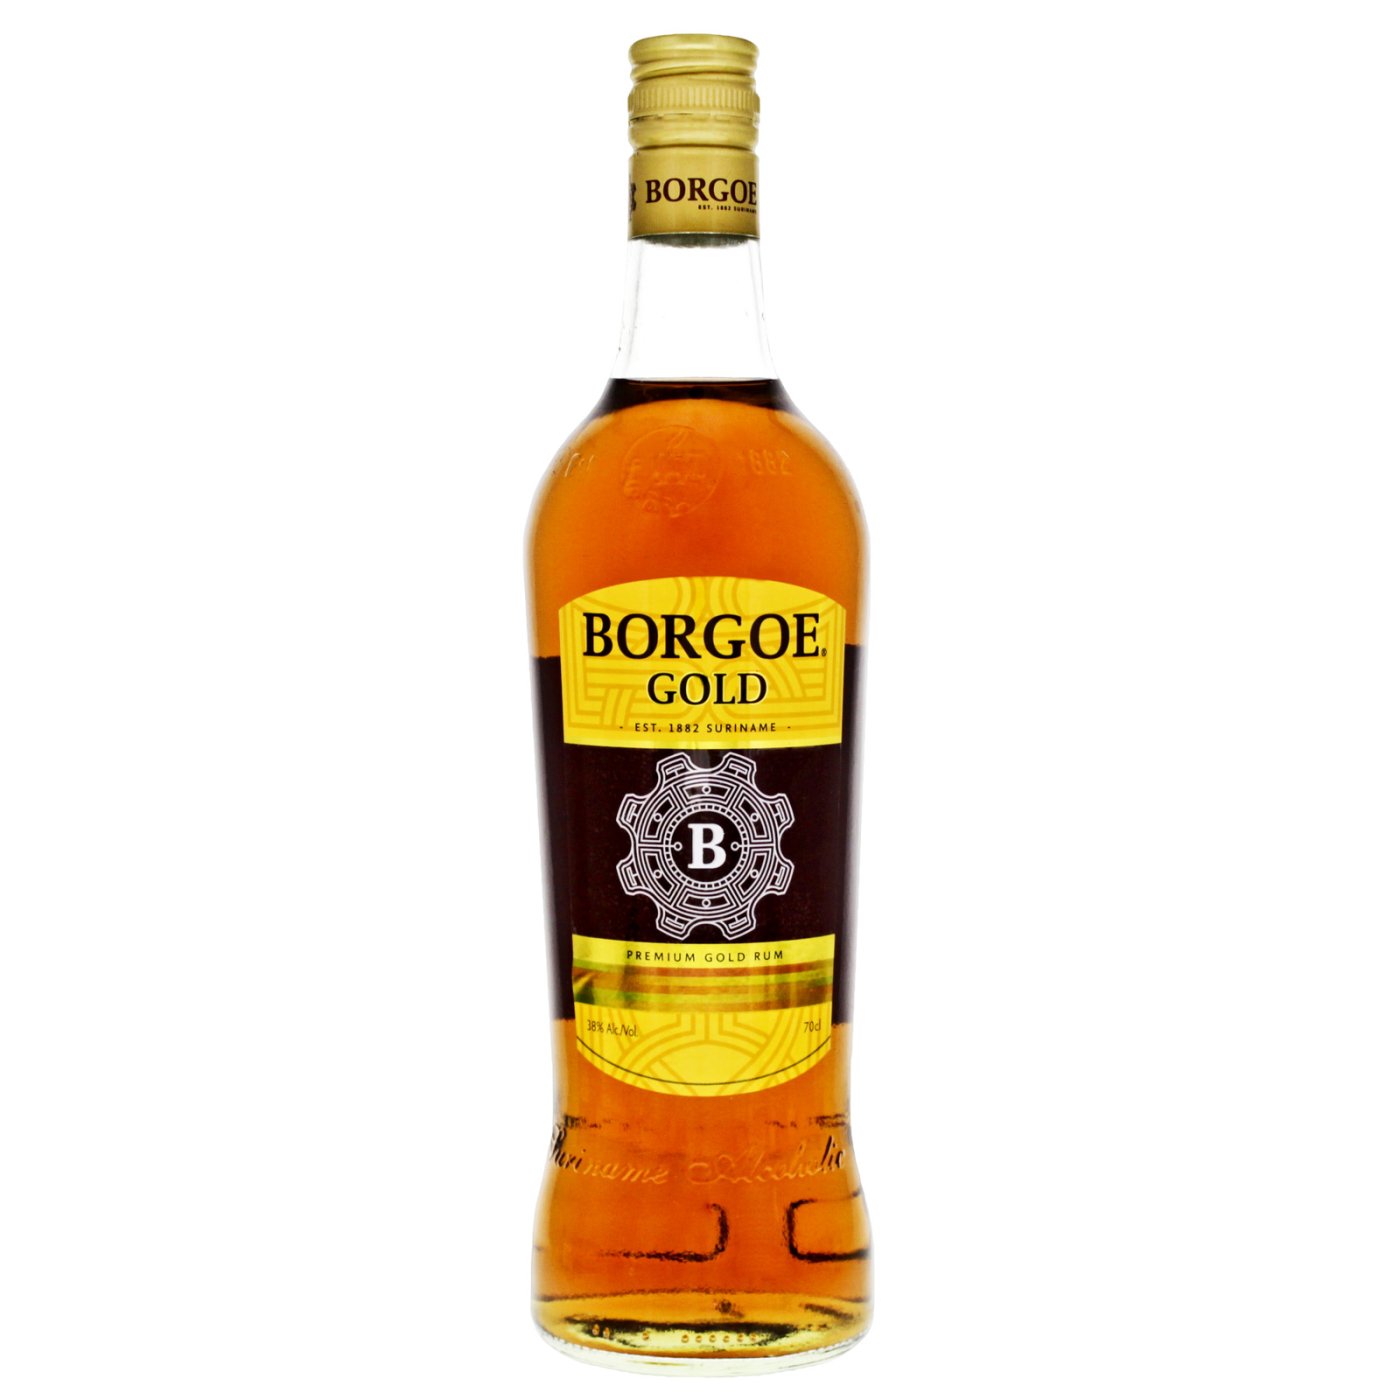 Borgoe - Gold 70cl